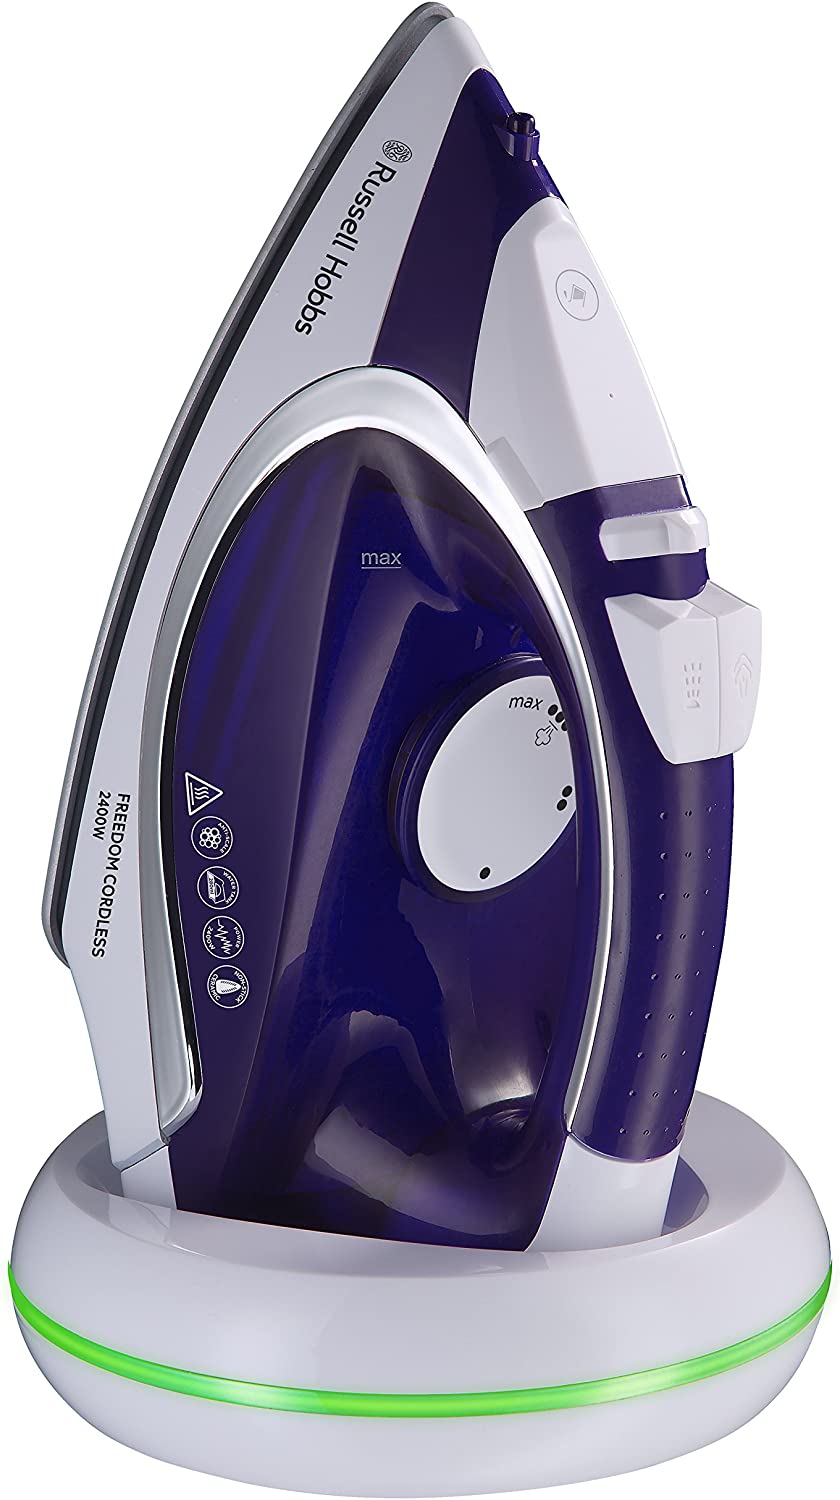 Russell Hobbs 23300 Freedom Cordless Iron, 2400 W, Purple/White, Porcelain